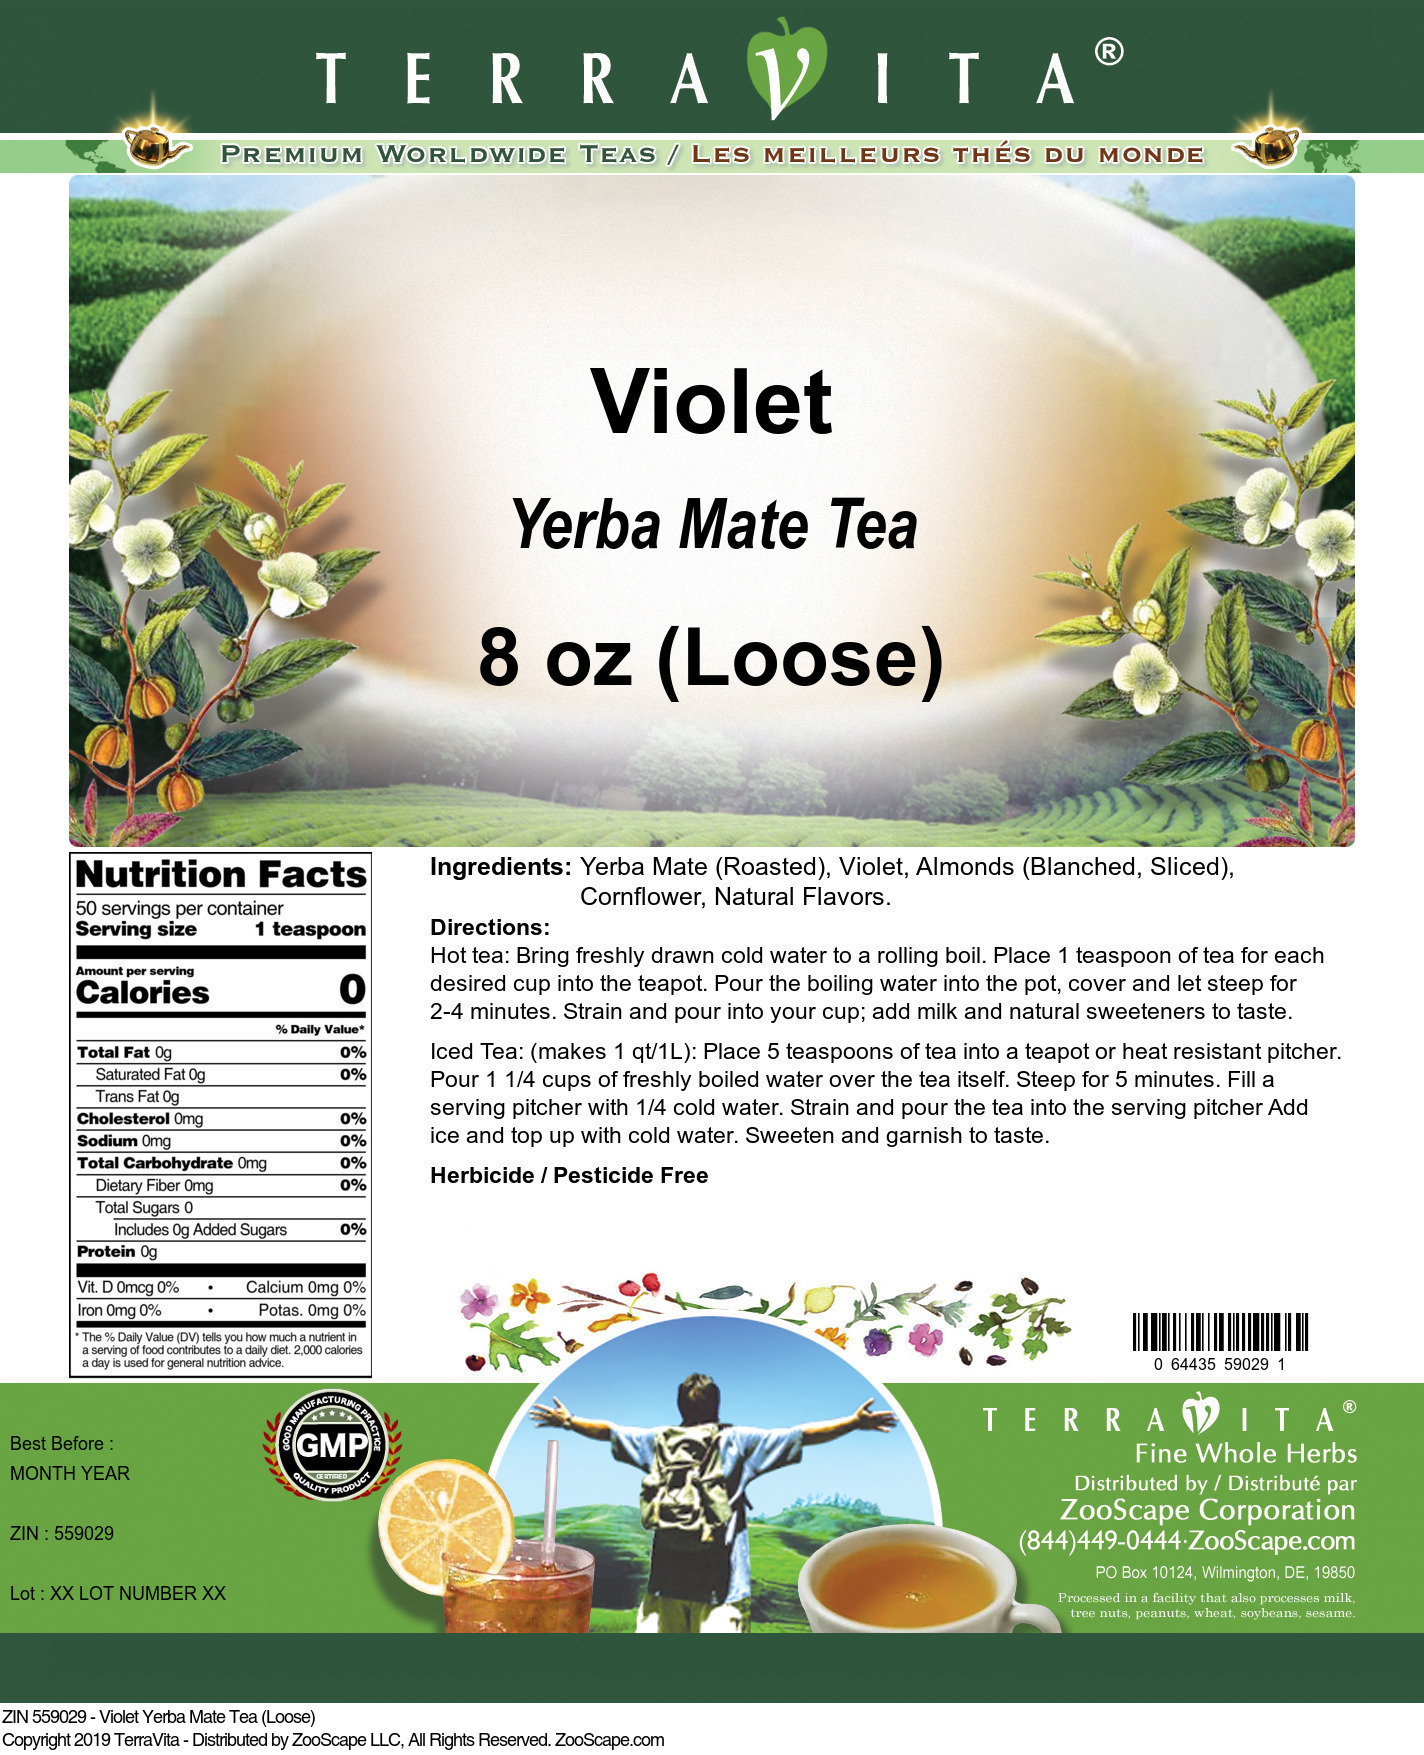 Violet Yerba Mate Tea (Loose) - Label